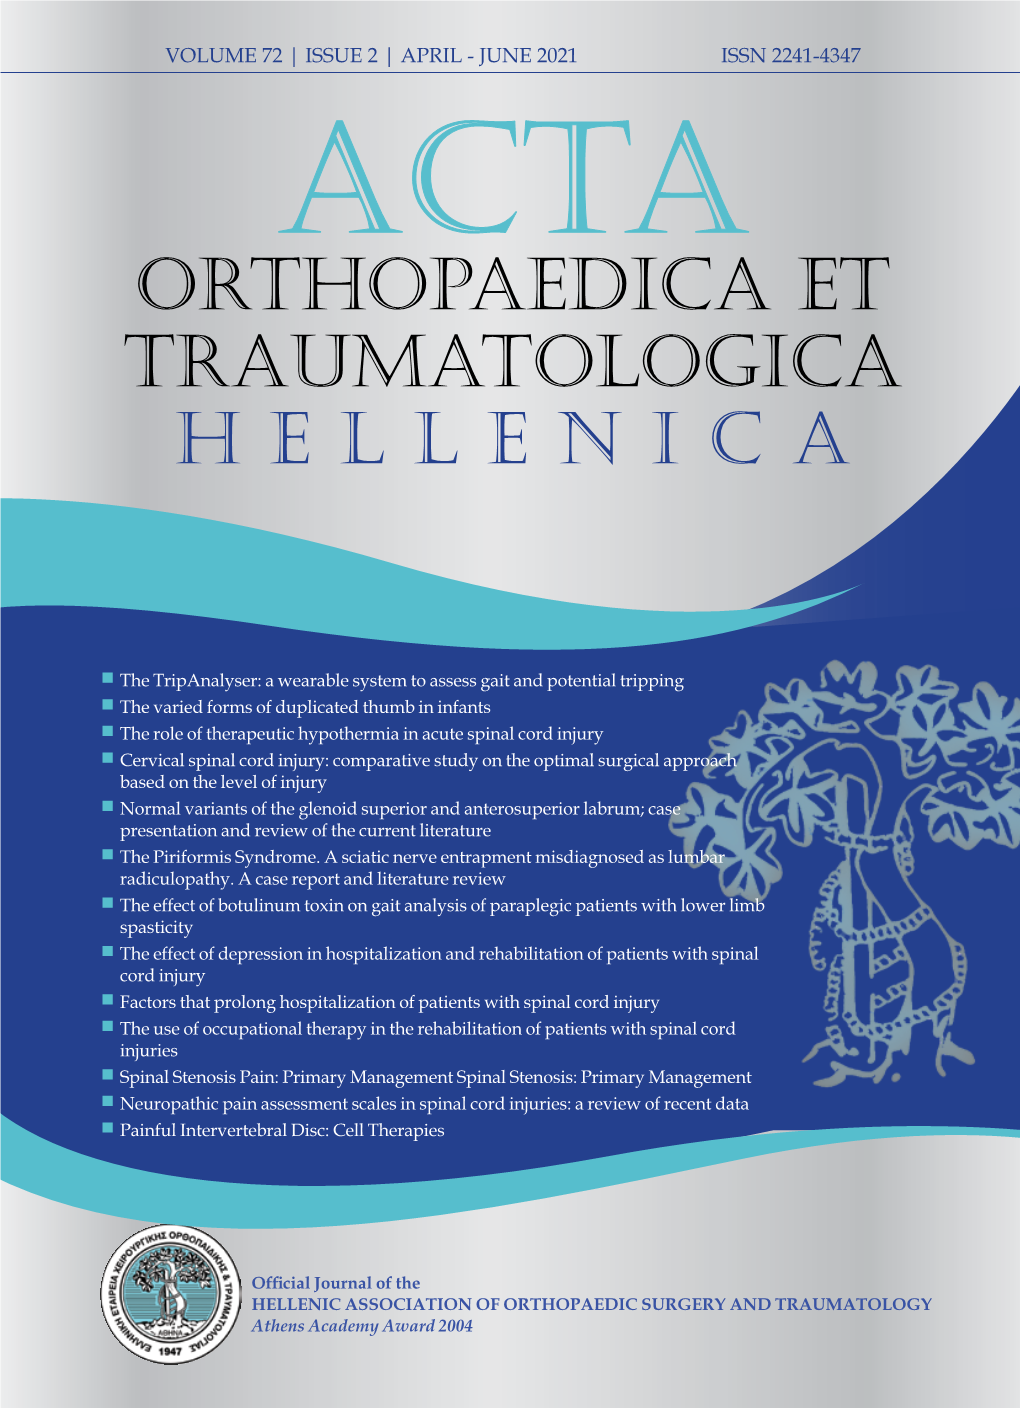 Acta Orthopaedica Et Traumatologica Hellenica